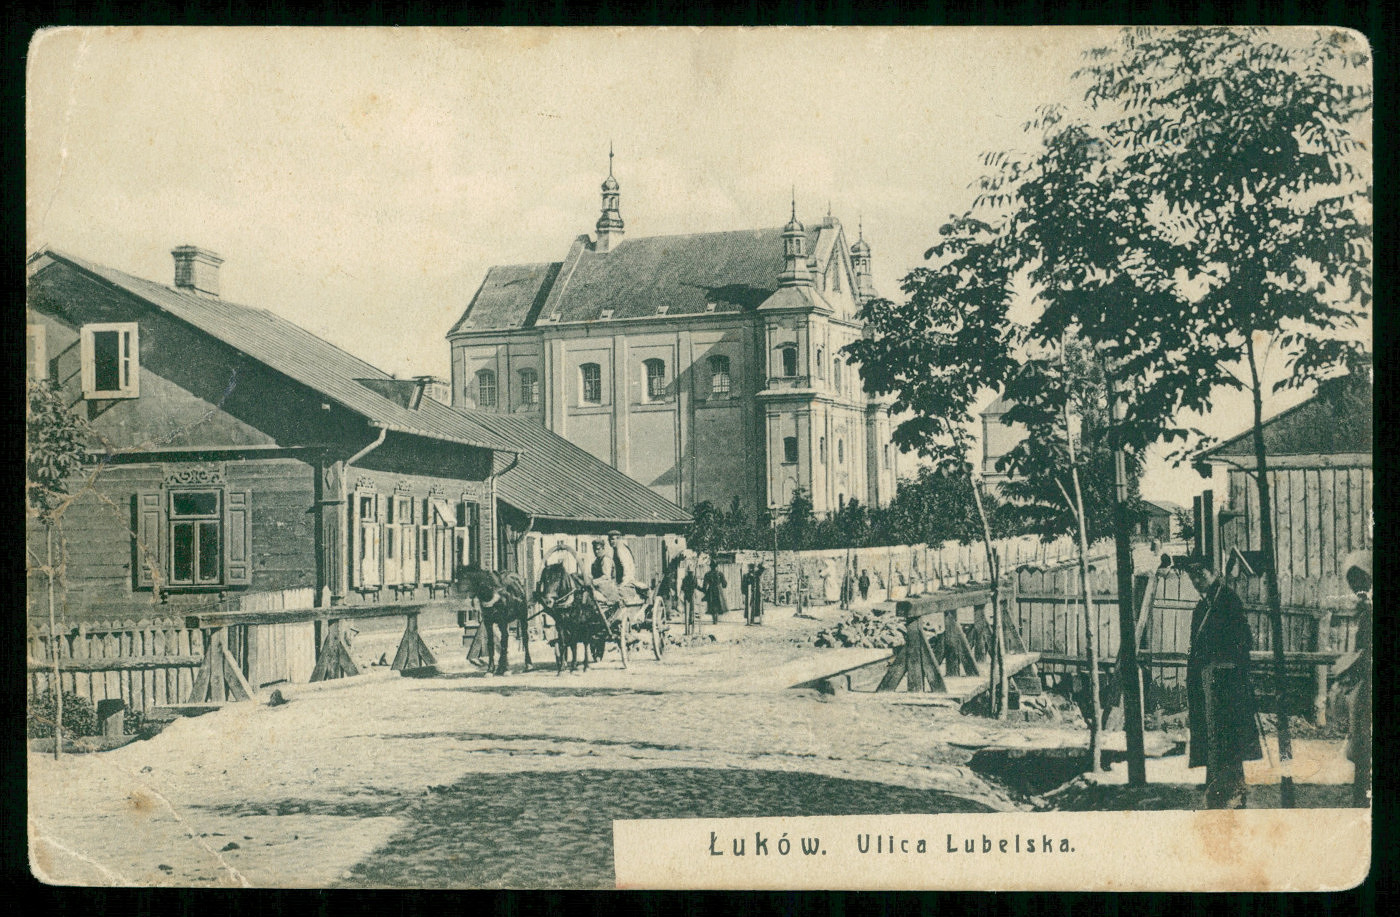 Łuków_1920_Polona_COMP.jpg [473.26 KB]